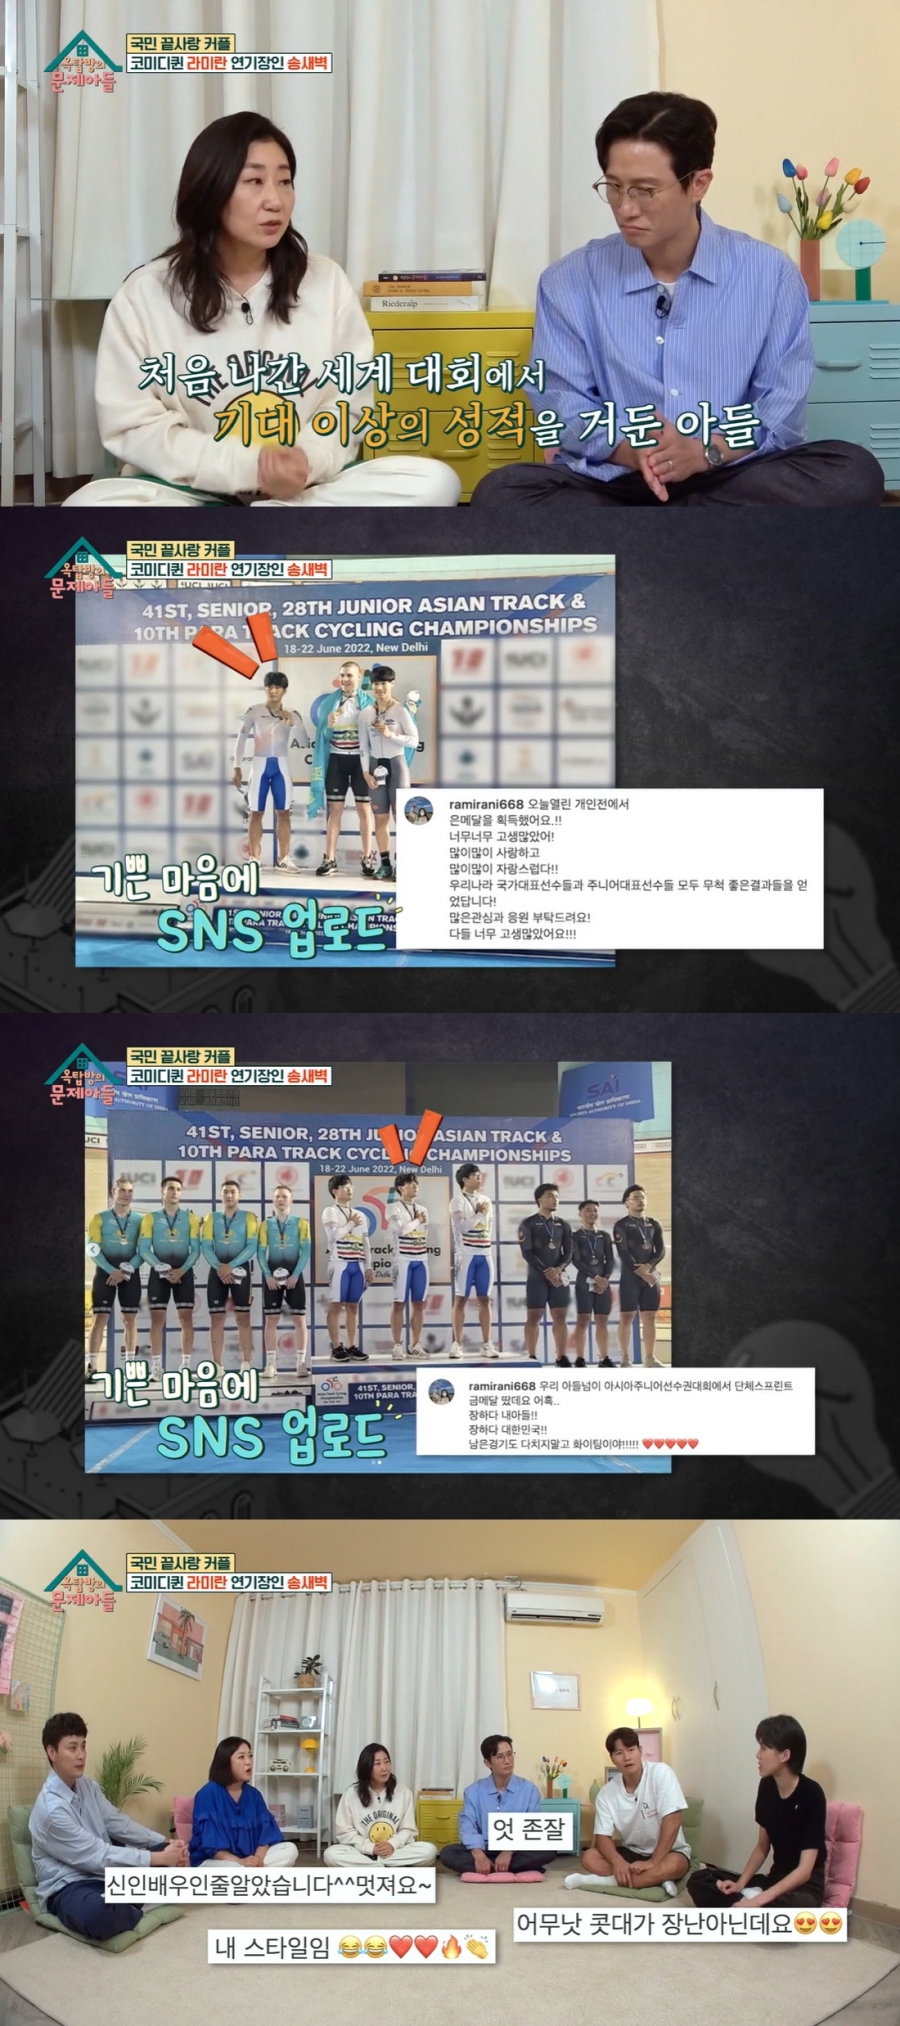 ▲ KBS2 예능 프로그램 '옥탑방의 문제아들' 배우 라미란. 출처| KBS